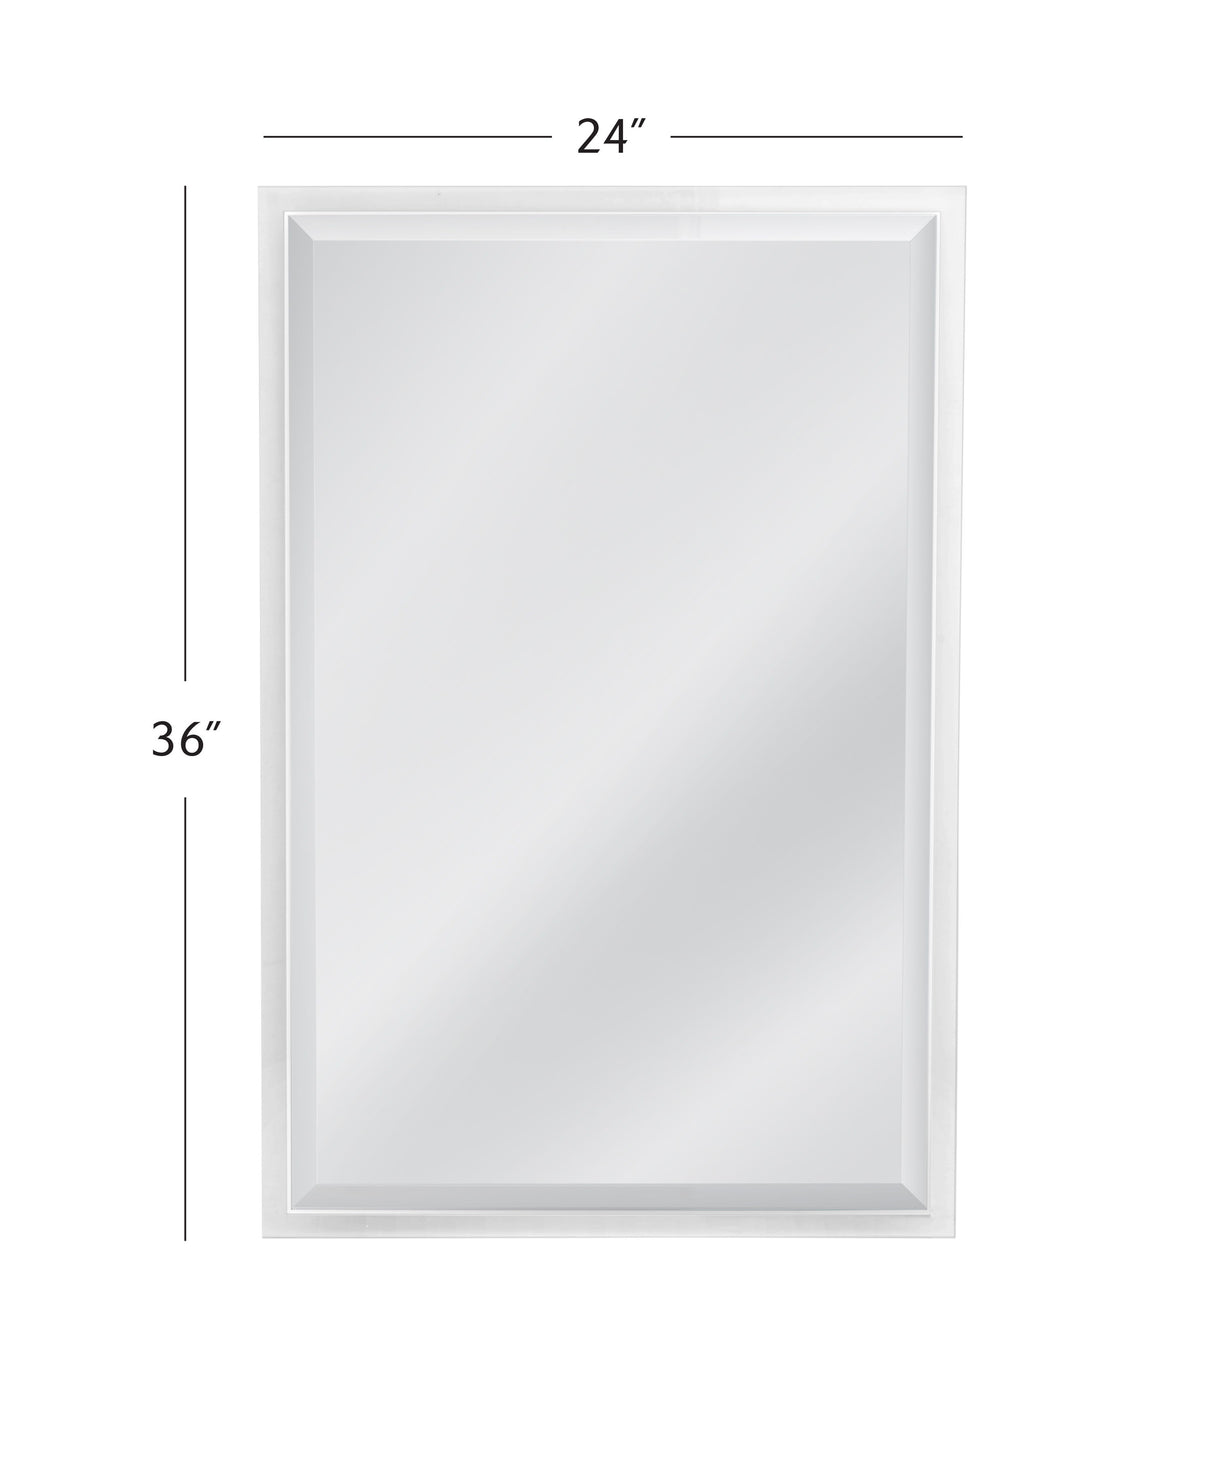 Karrenina - Wall Mirror - White